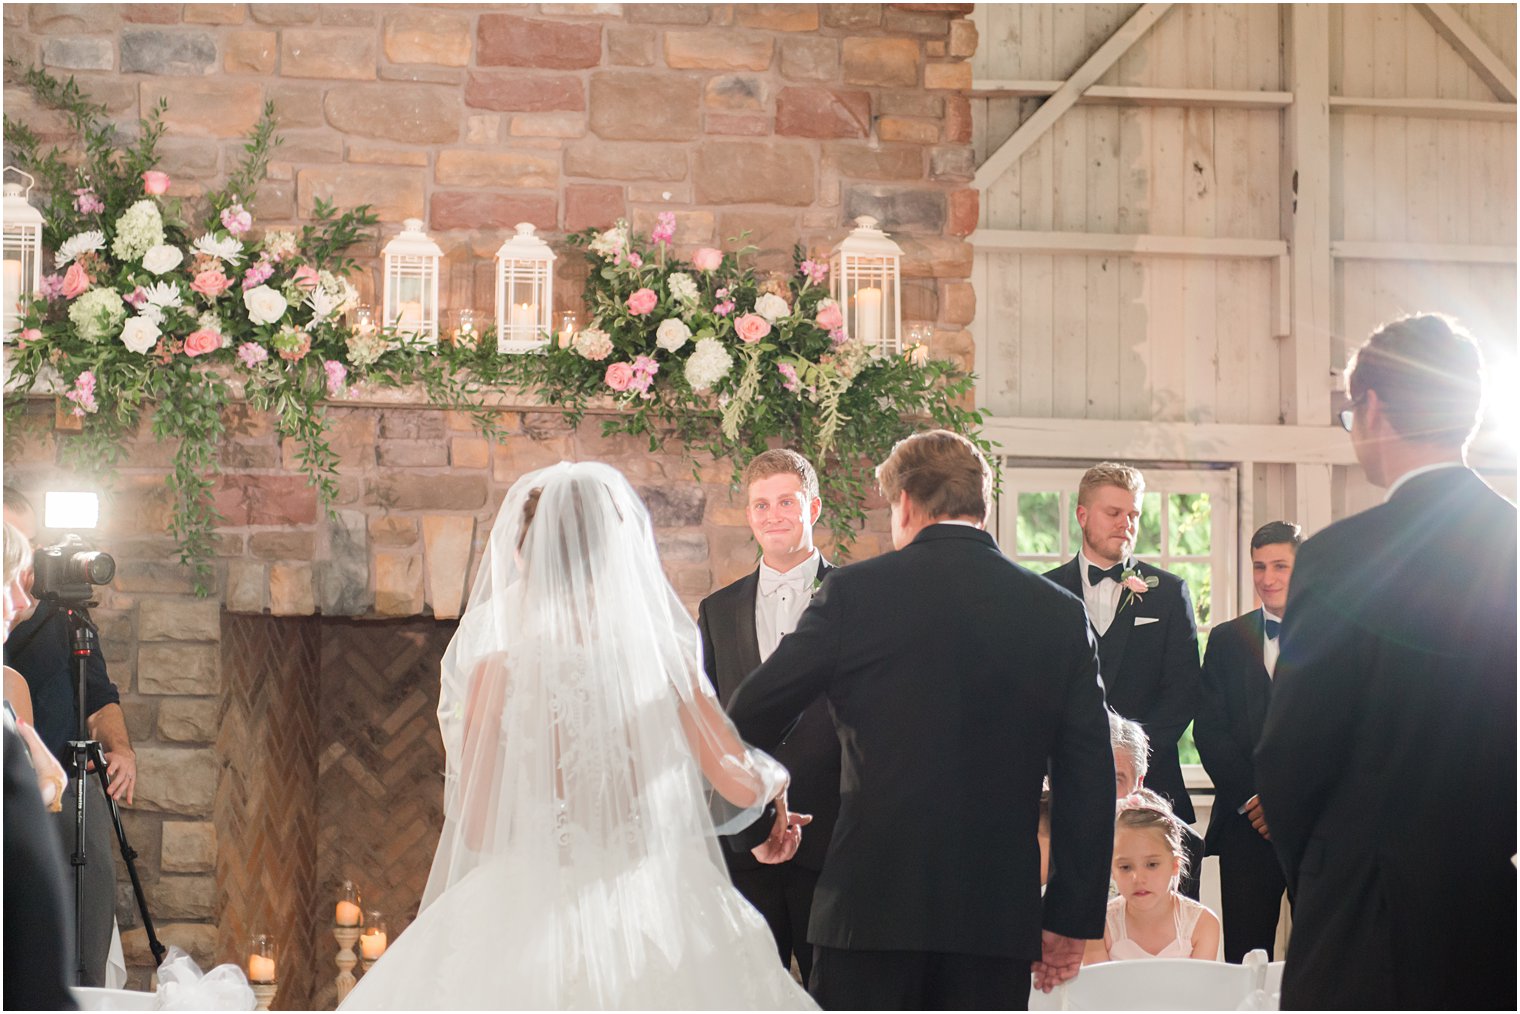 dad walks bride down aisle at Ashford Estate for wedding ceremony